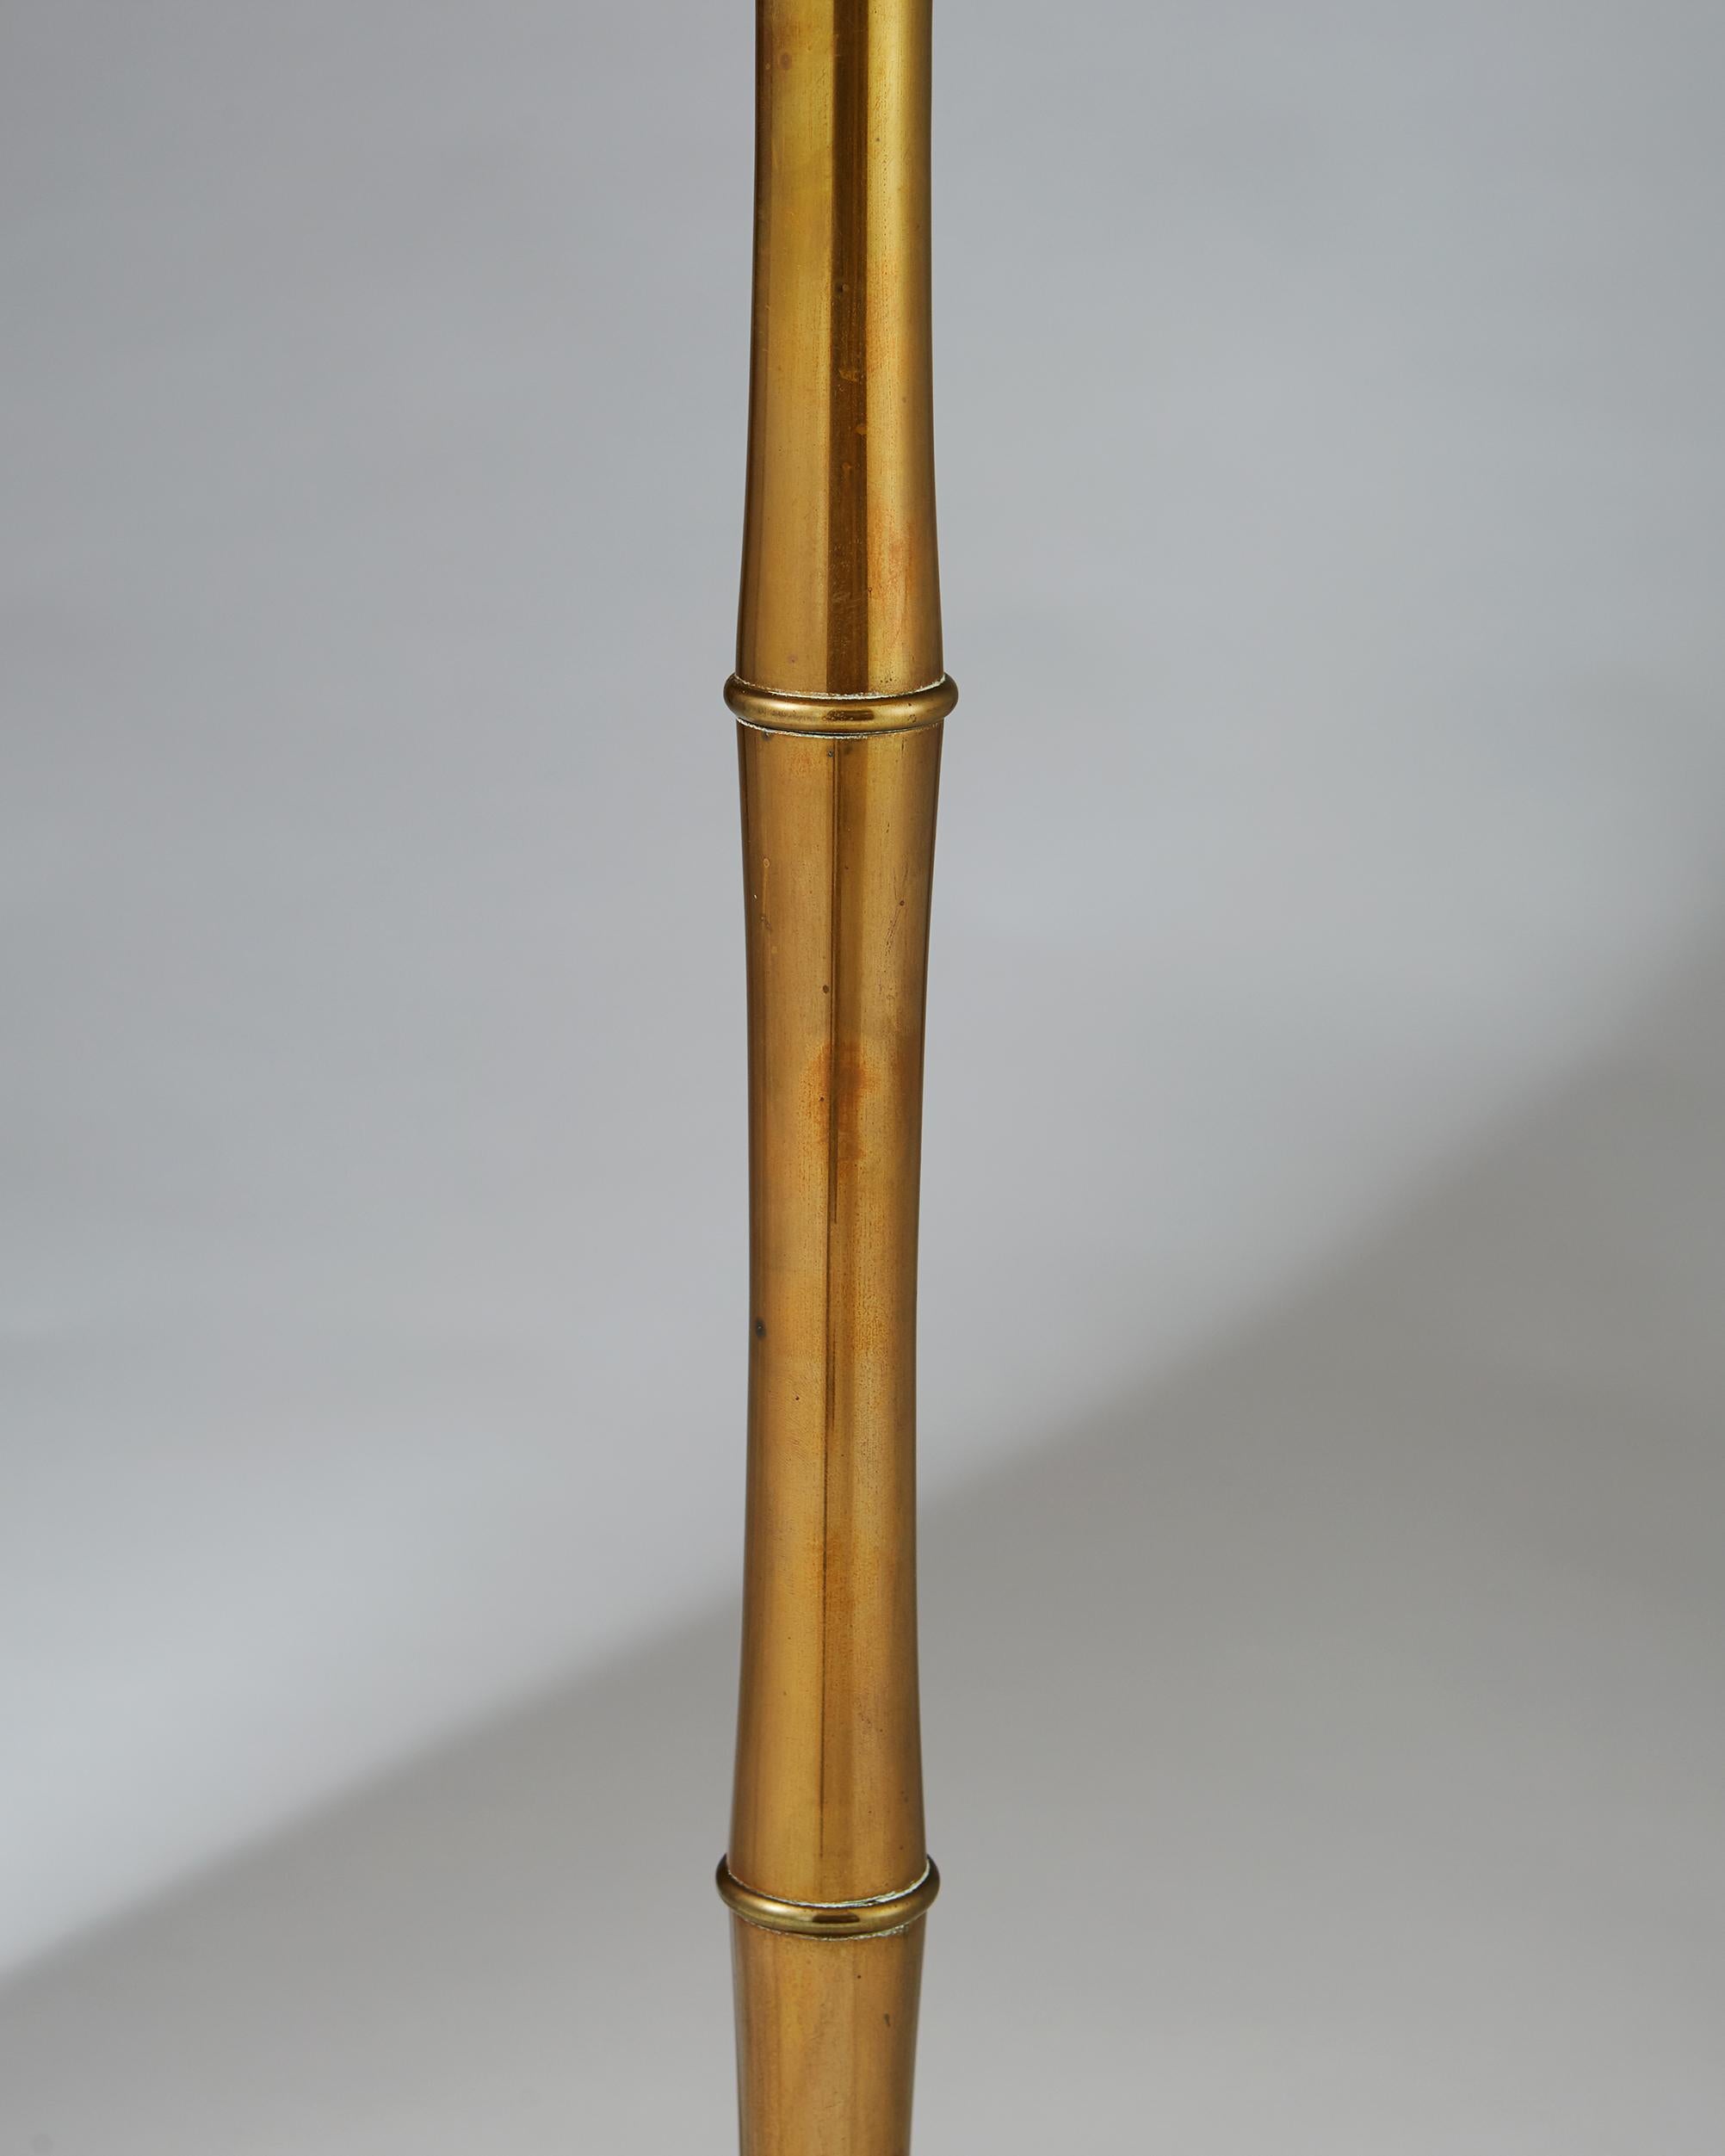 Scandinavian Modern Floor Lamps ‘Bamboo Ml 1 F’ Designed by Ingo Maurer, Germany, 1968